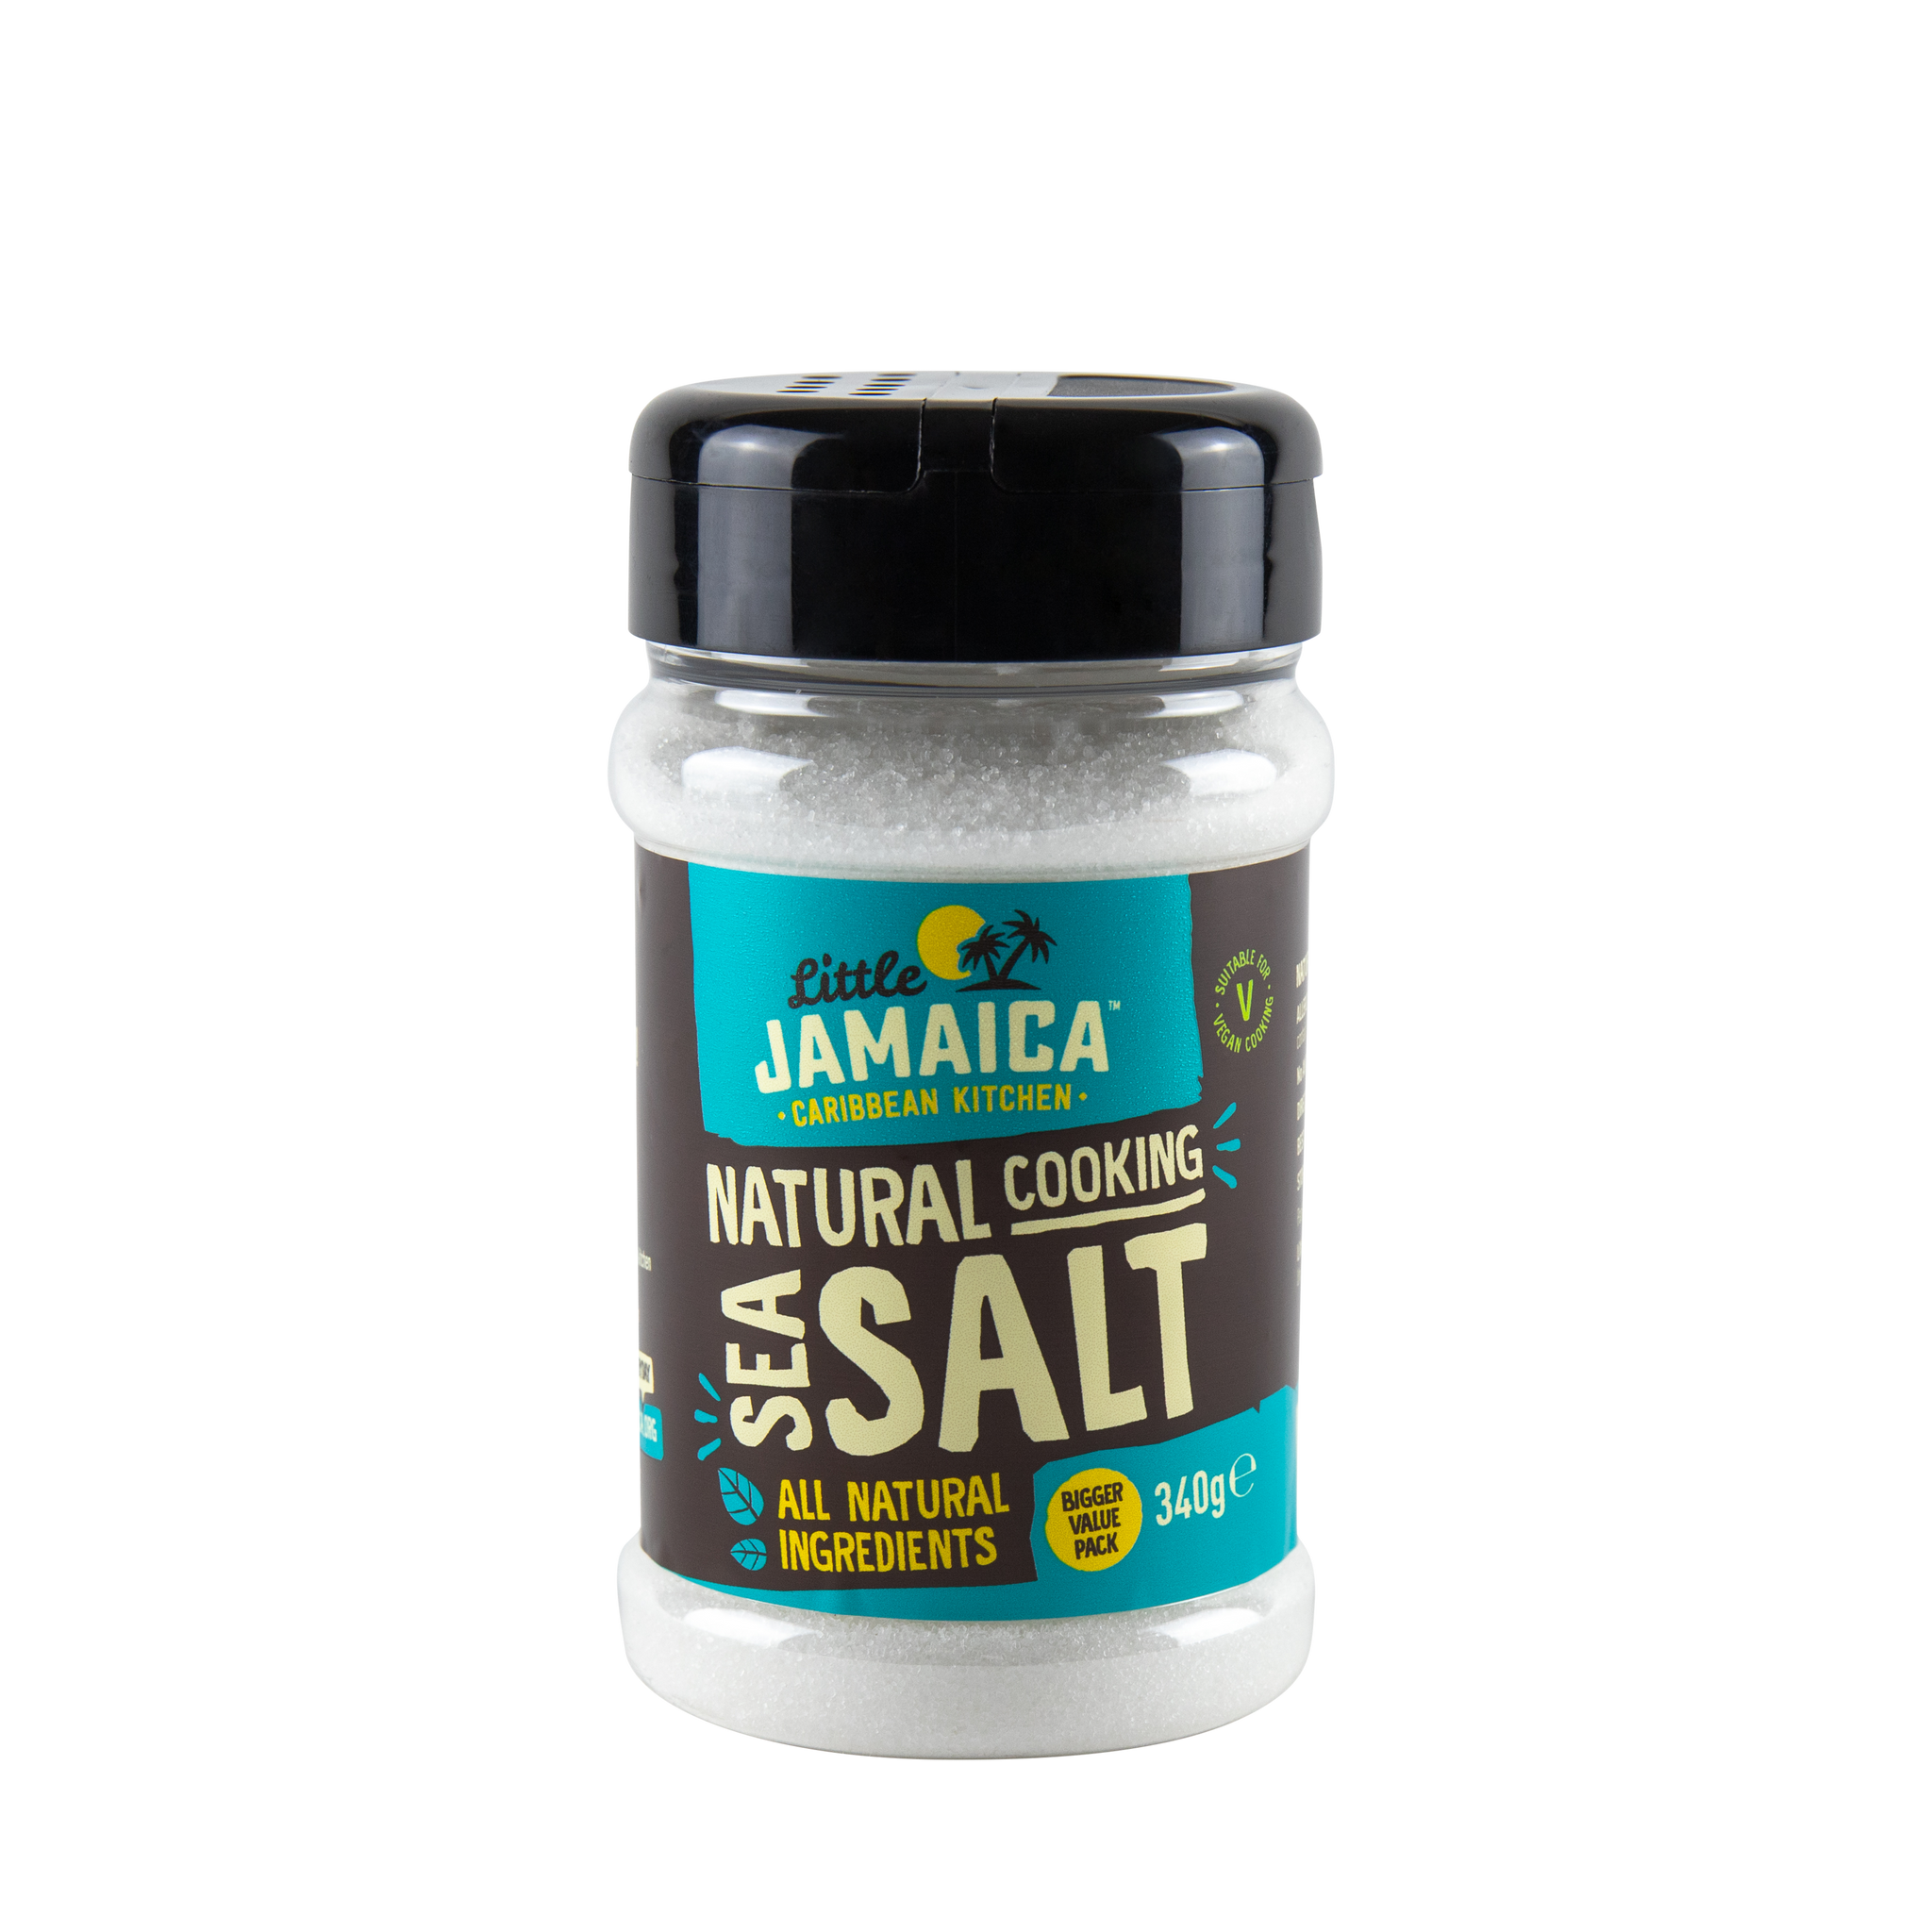 Natural Cooking Sea Salt